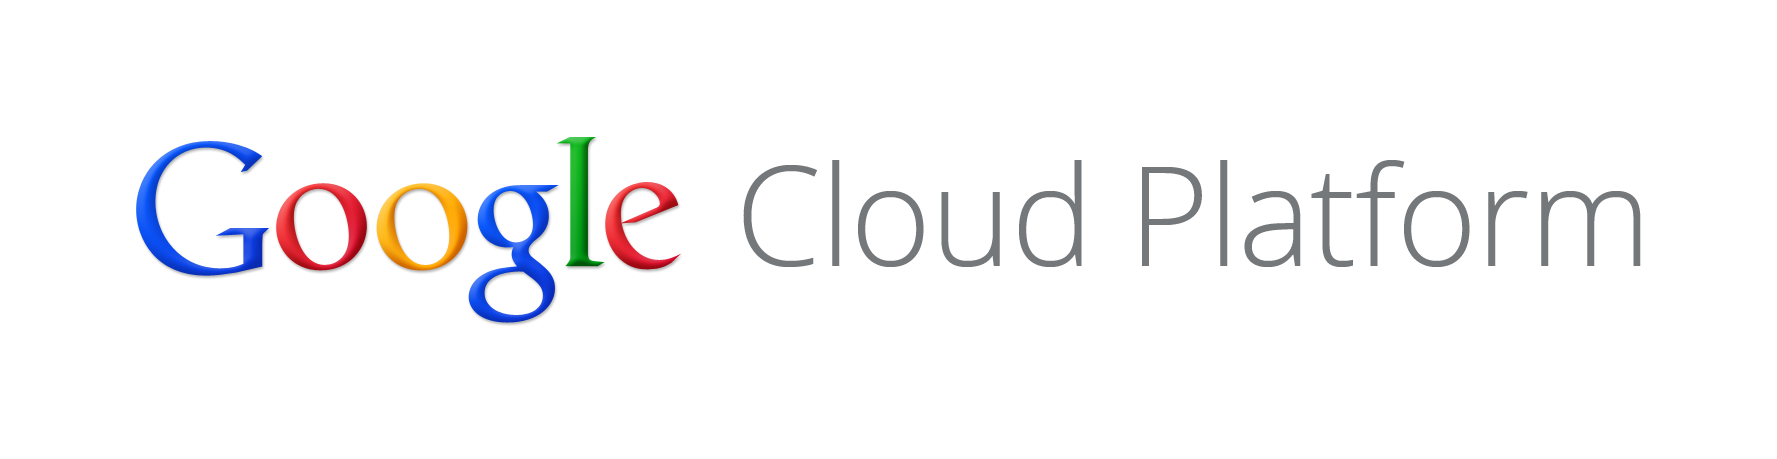 SendGrid Joins Google Cloud Platform Partner Program ... - Google Cloud Logo Transparent